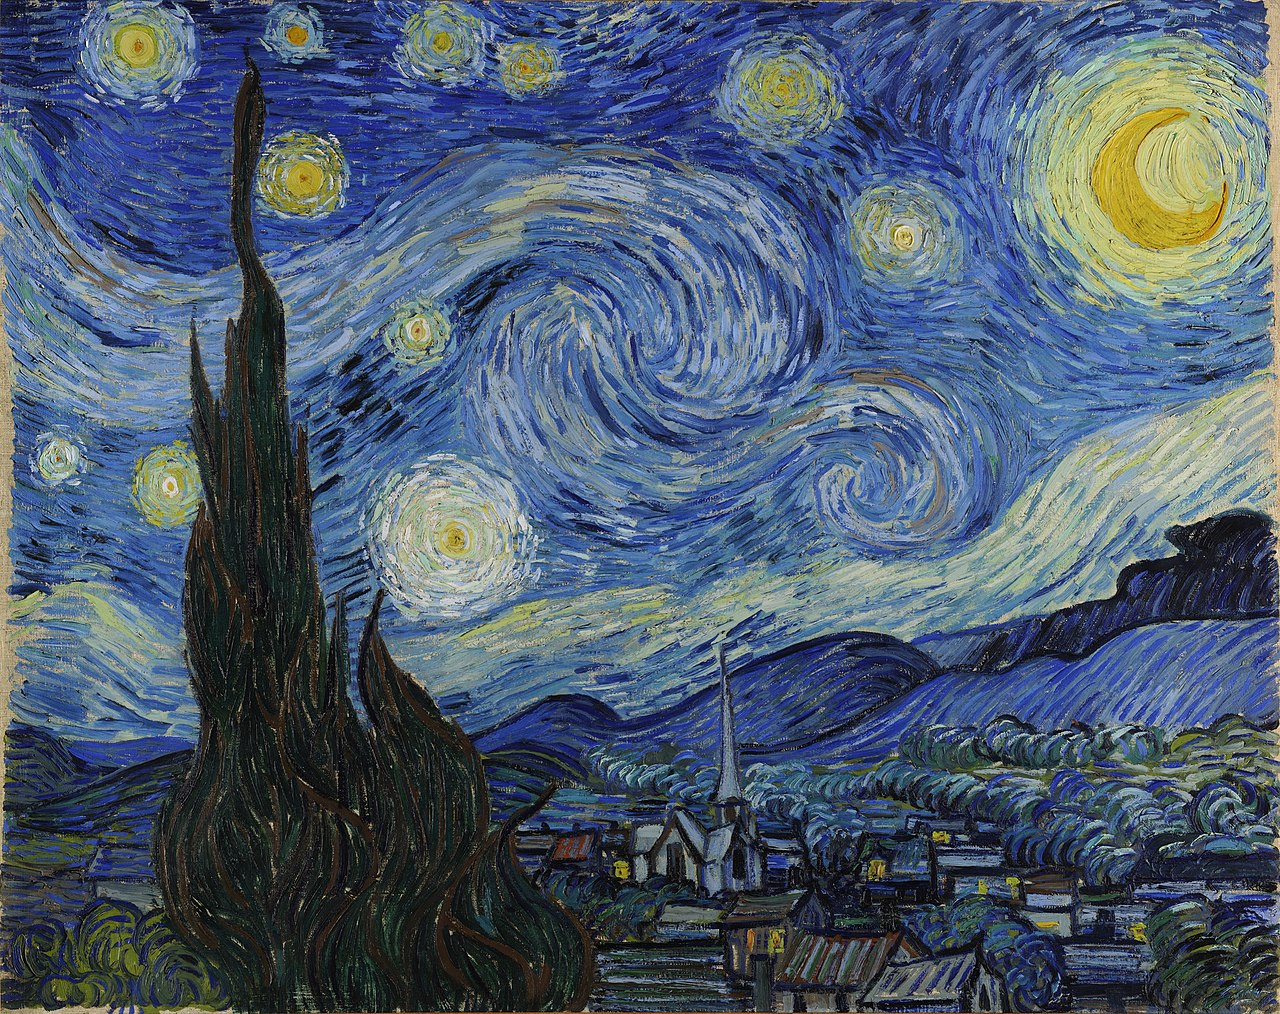 La notte stellata by Vincent van Gogh - 1889 - 73 x 92 cm Museum of Modern Art